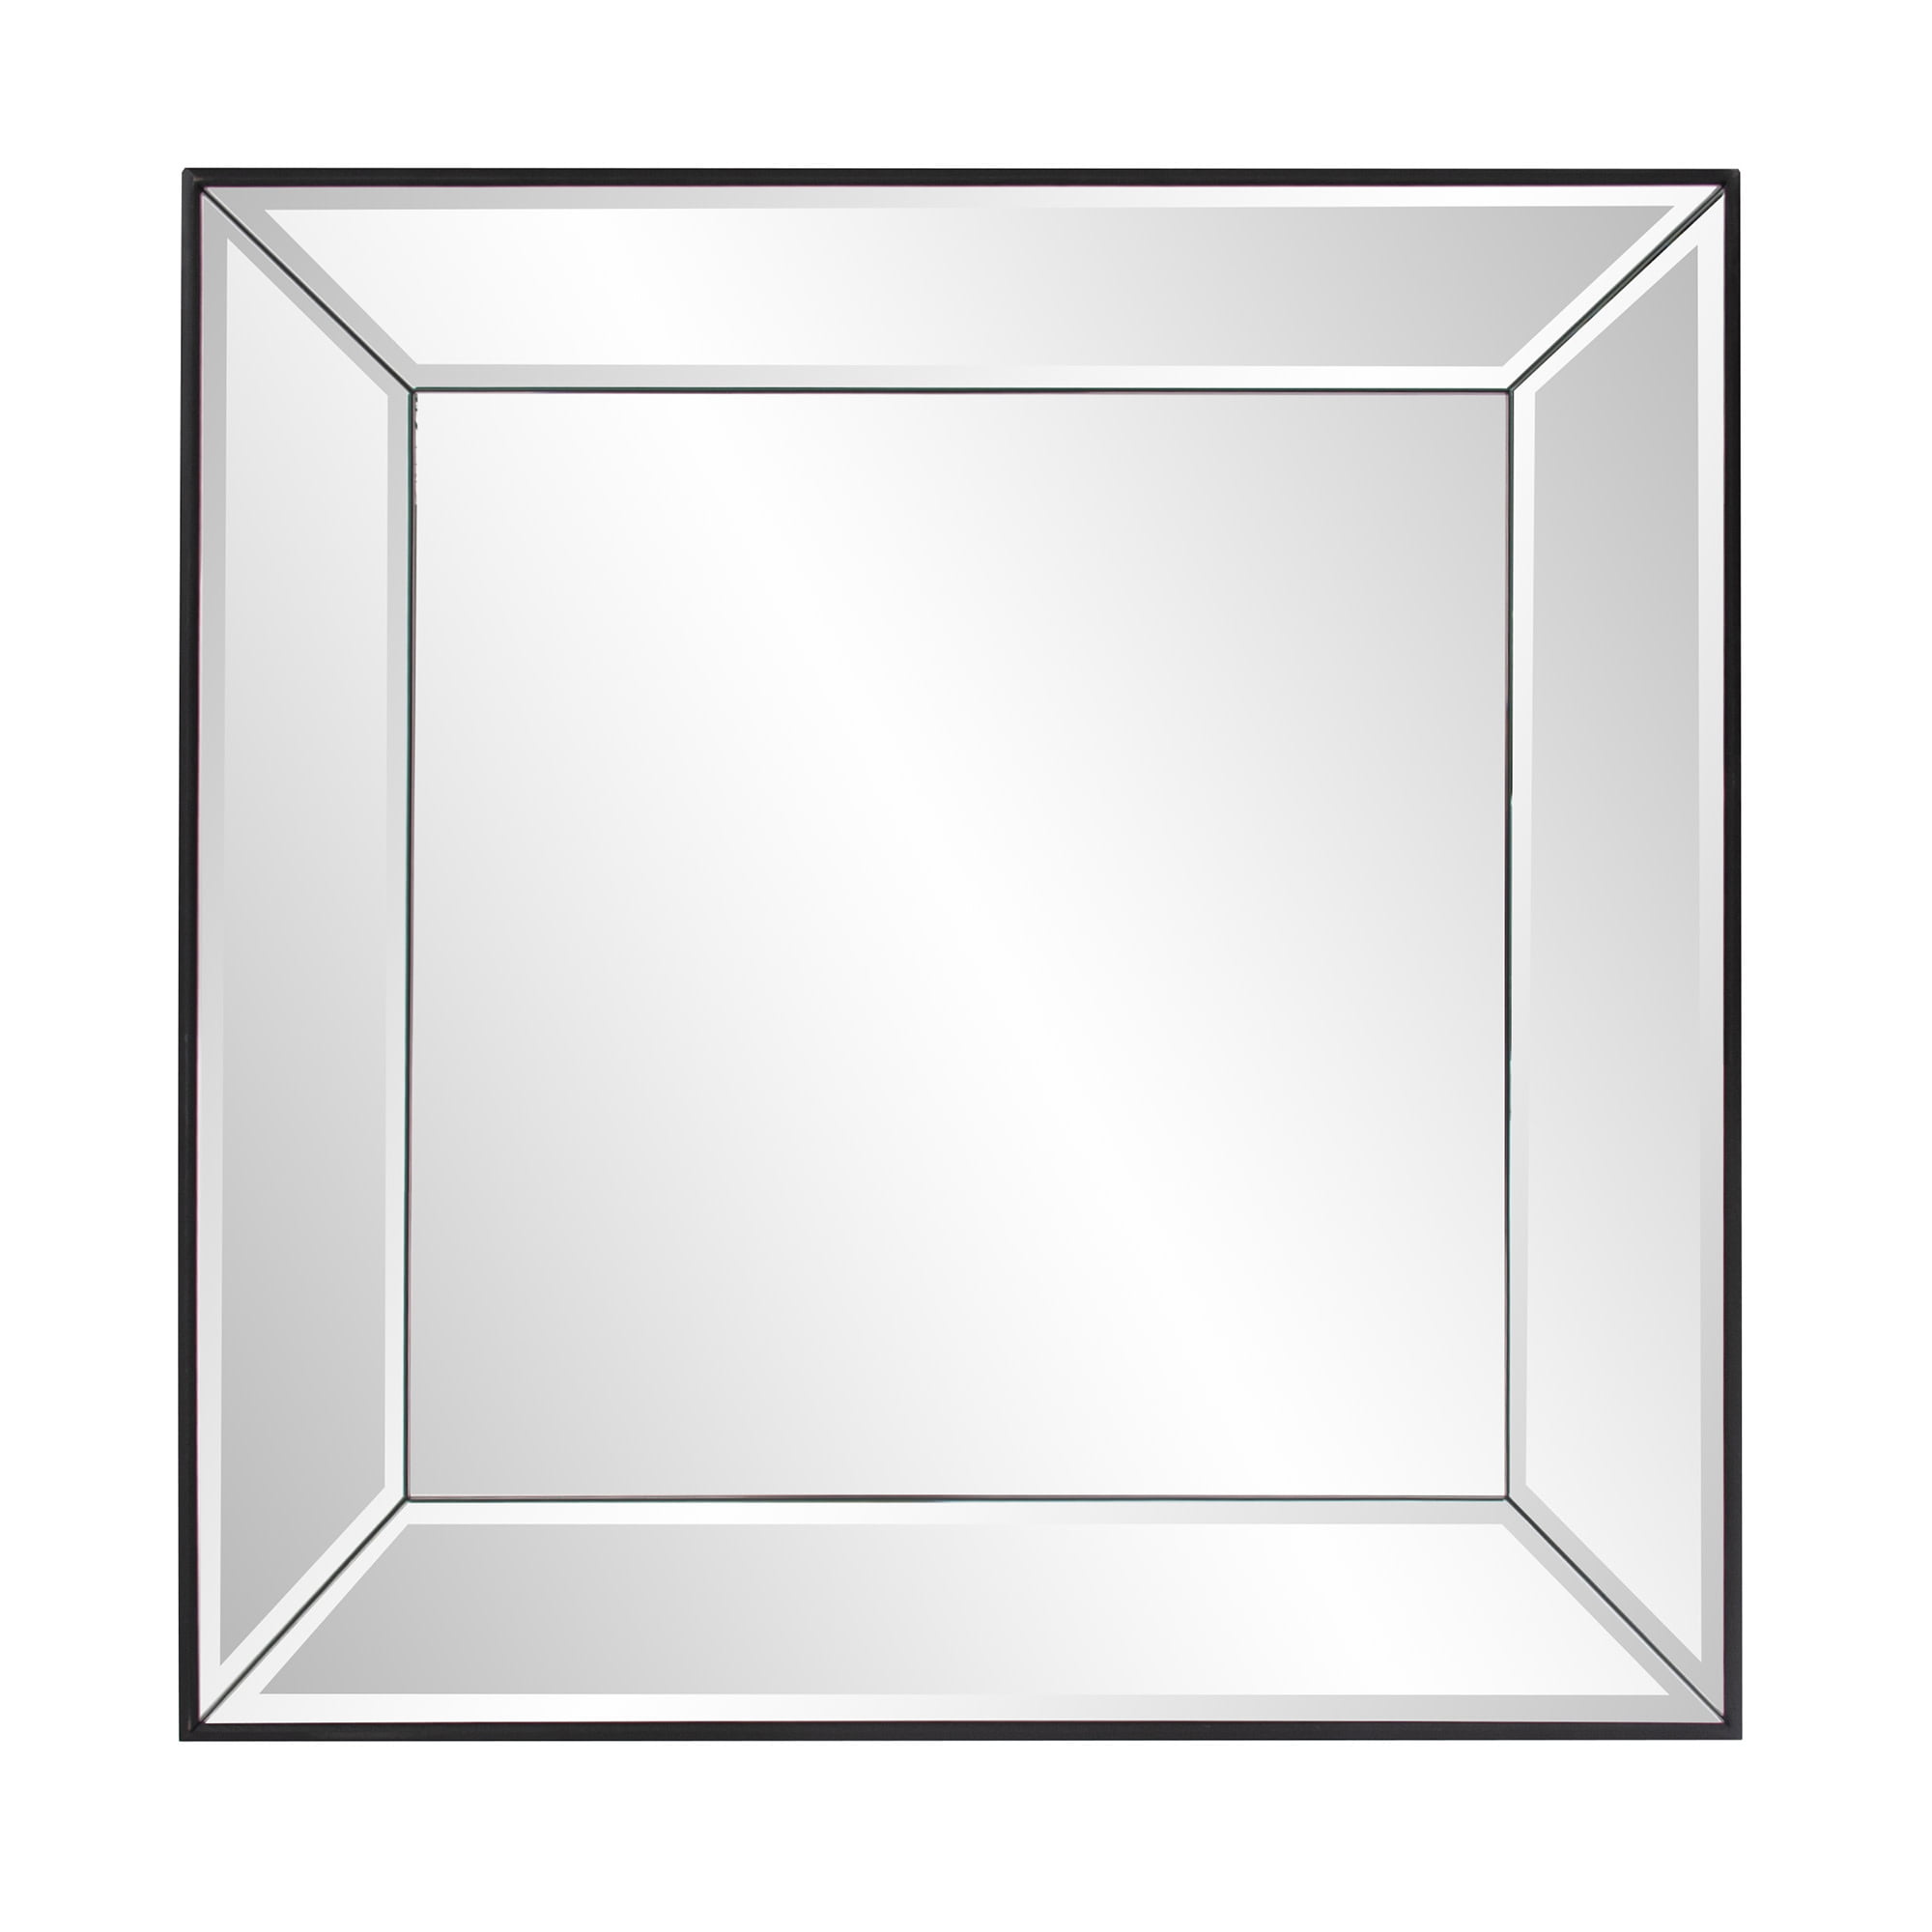 Erias Mirror glass sheets 12" X 12" all 4 pieces 